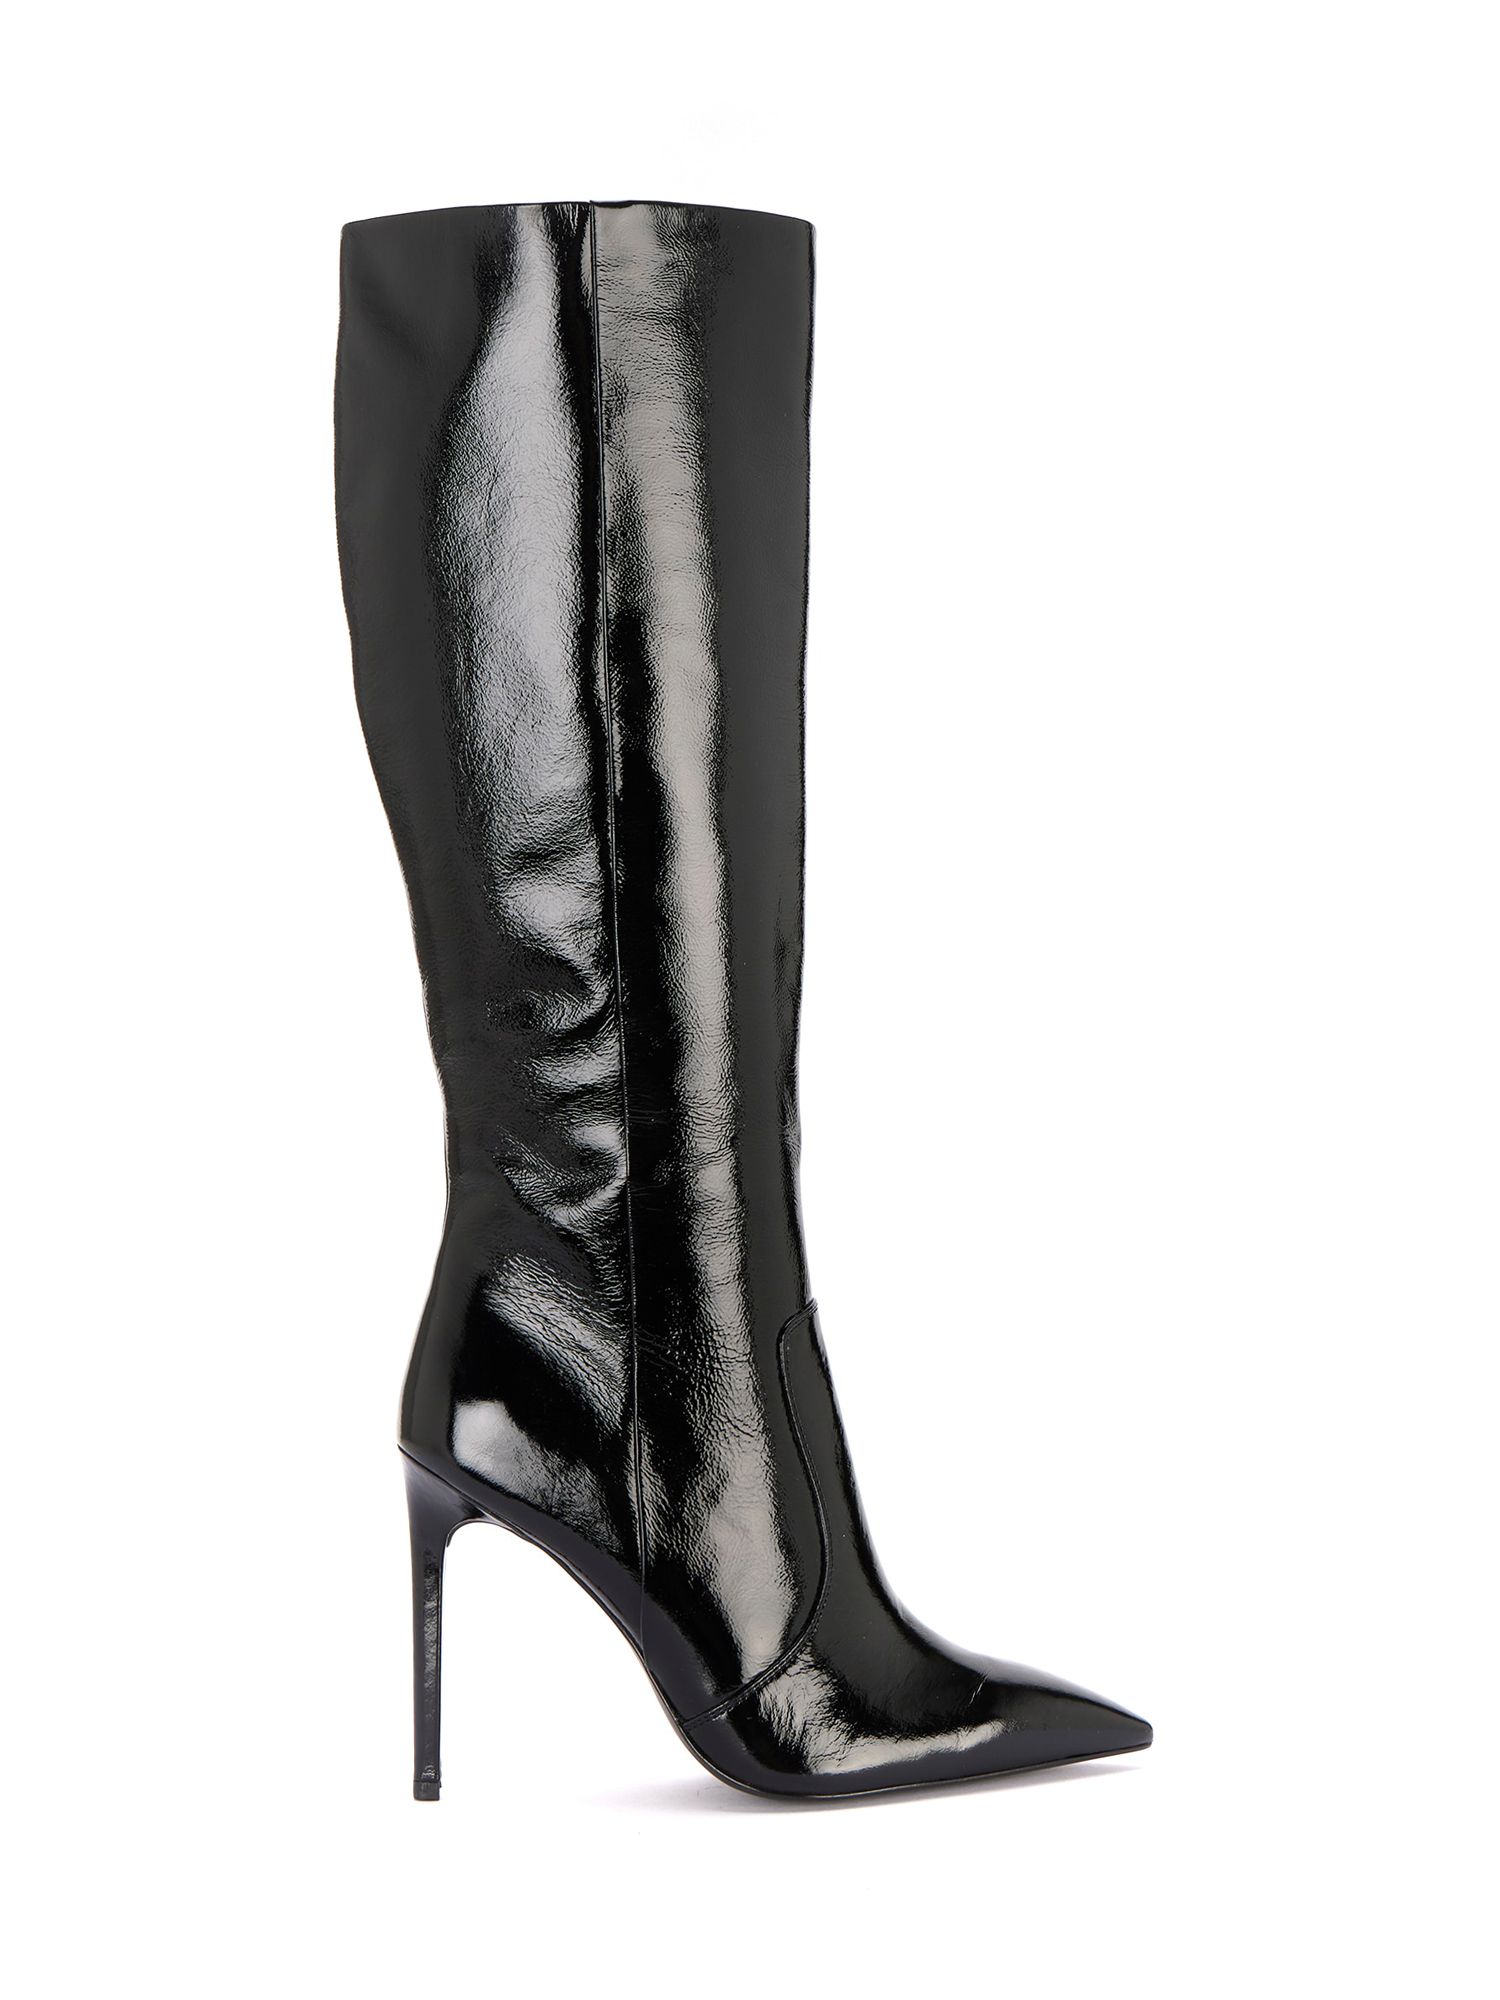 Mint Velvet Patent Leather Knee High Boots, Black